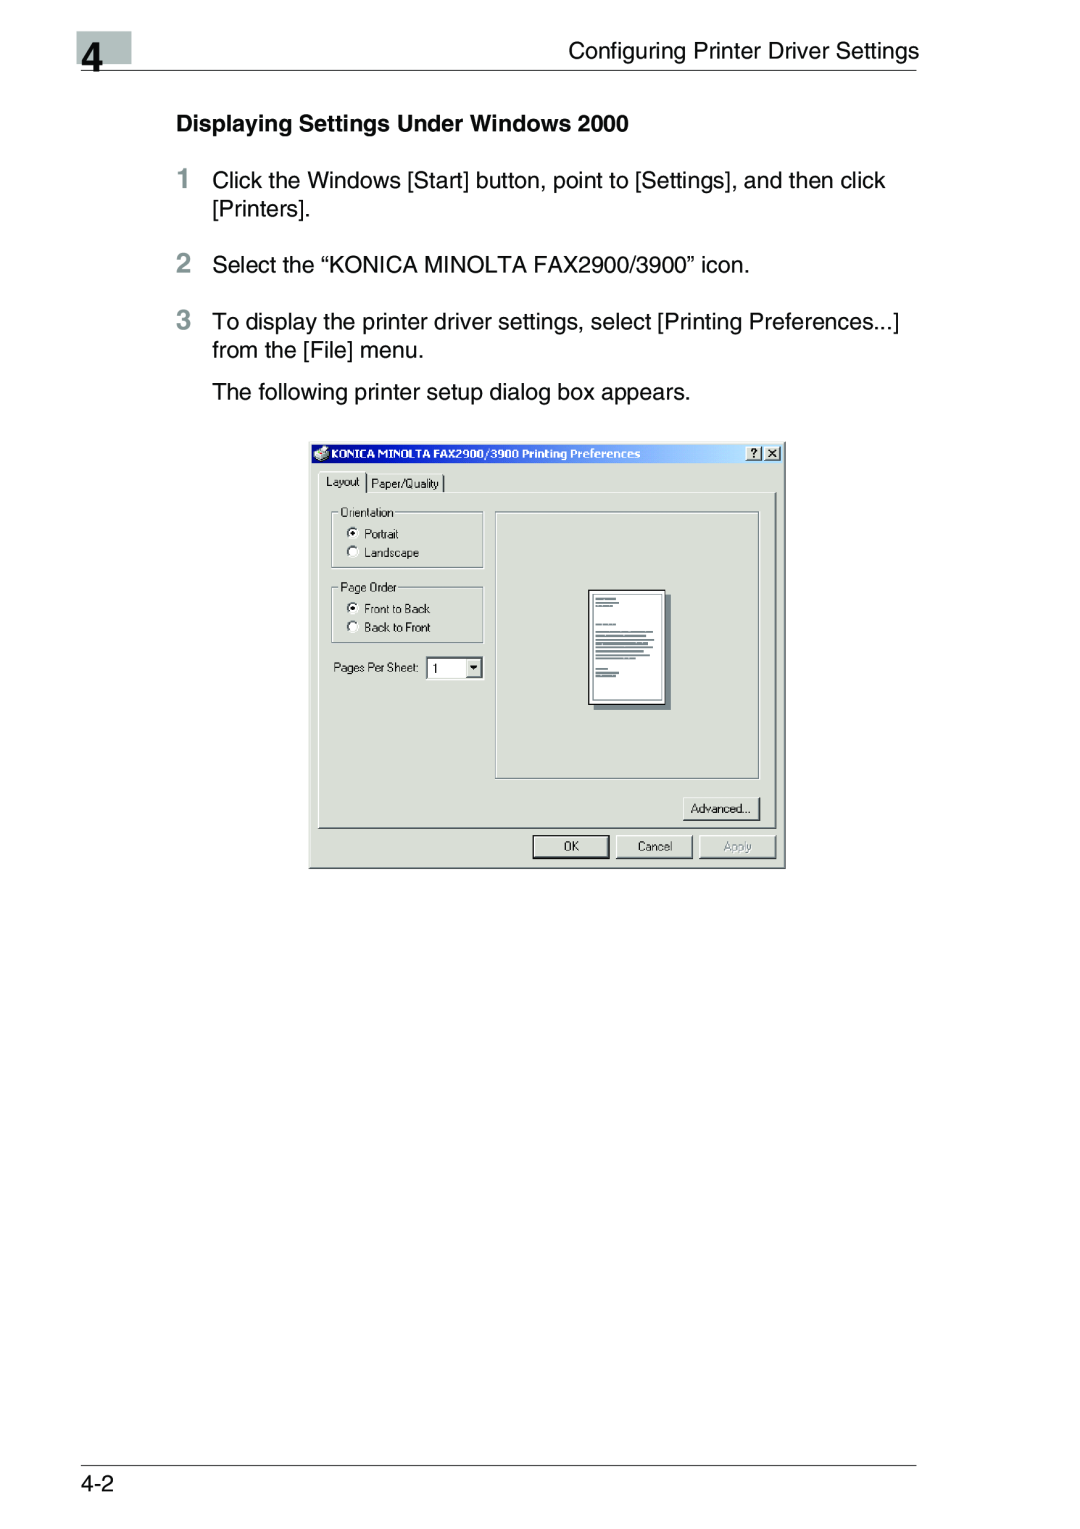 Konica Minolta FAX2900/FAX3900 manual Configuring Printer Driver Settings, Displaying Settings Under Windows 